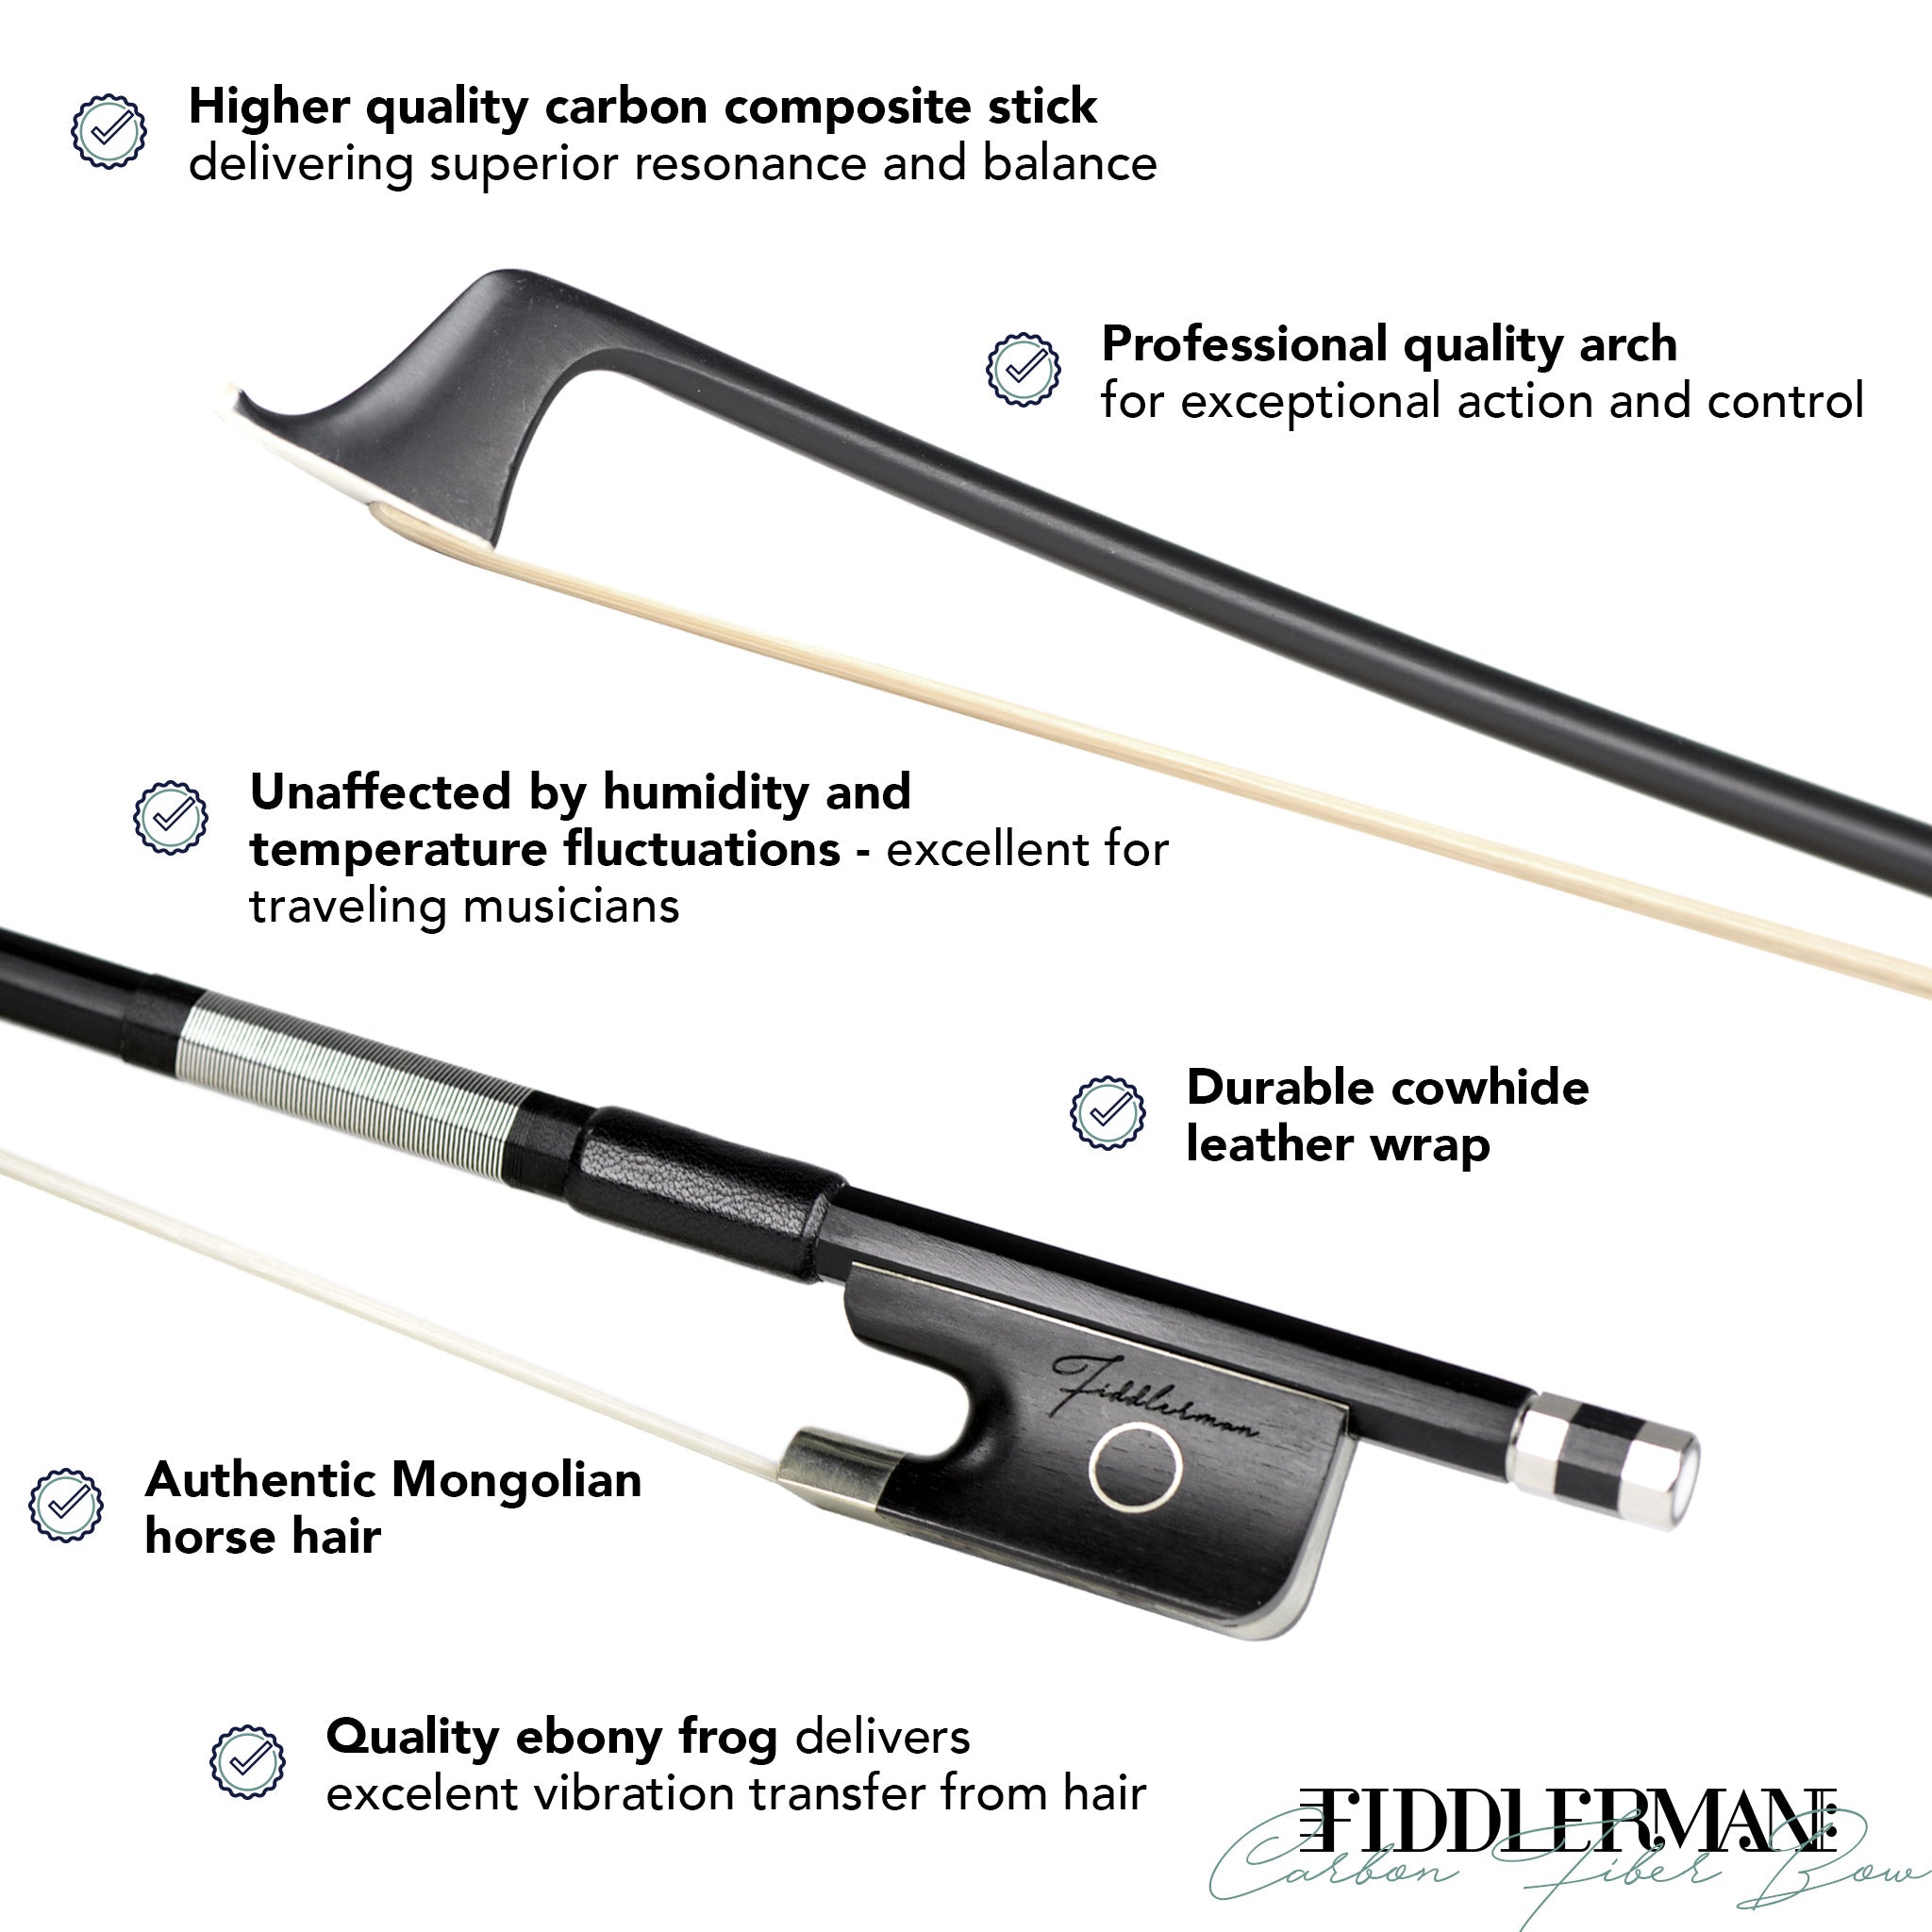 Fiddlerman Carbon Fiber Cello Bow Infographic